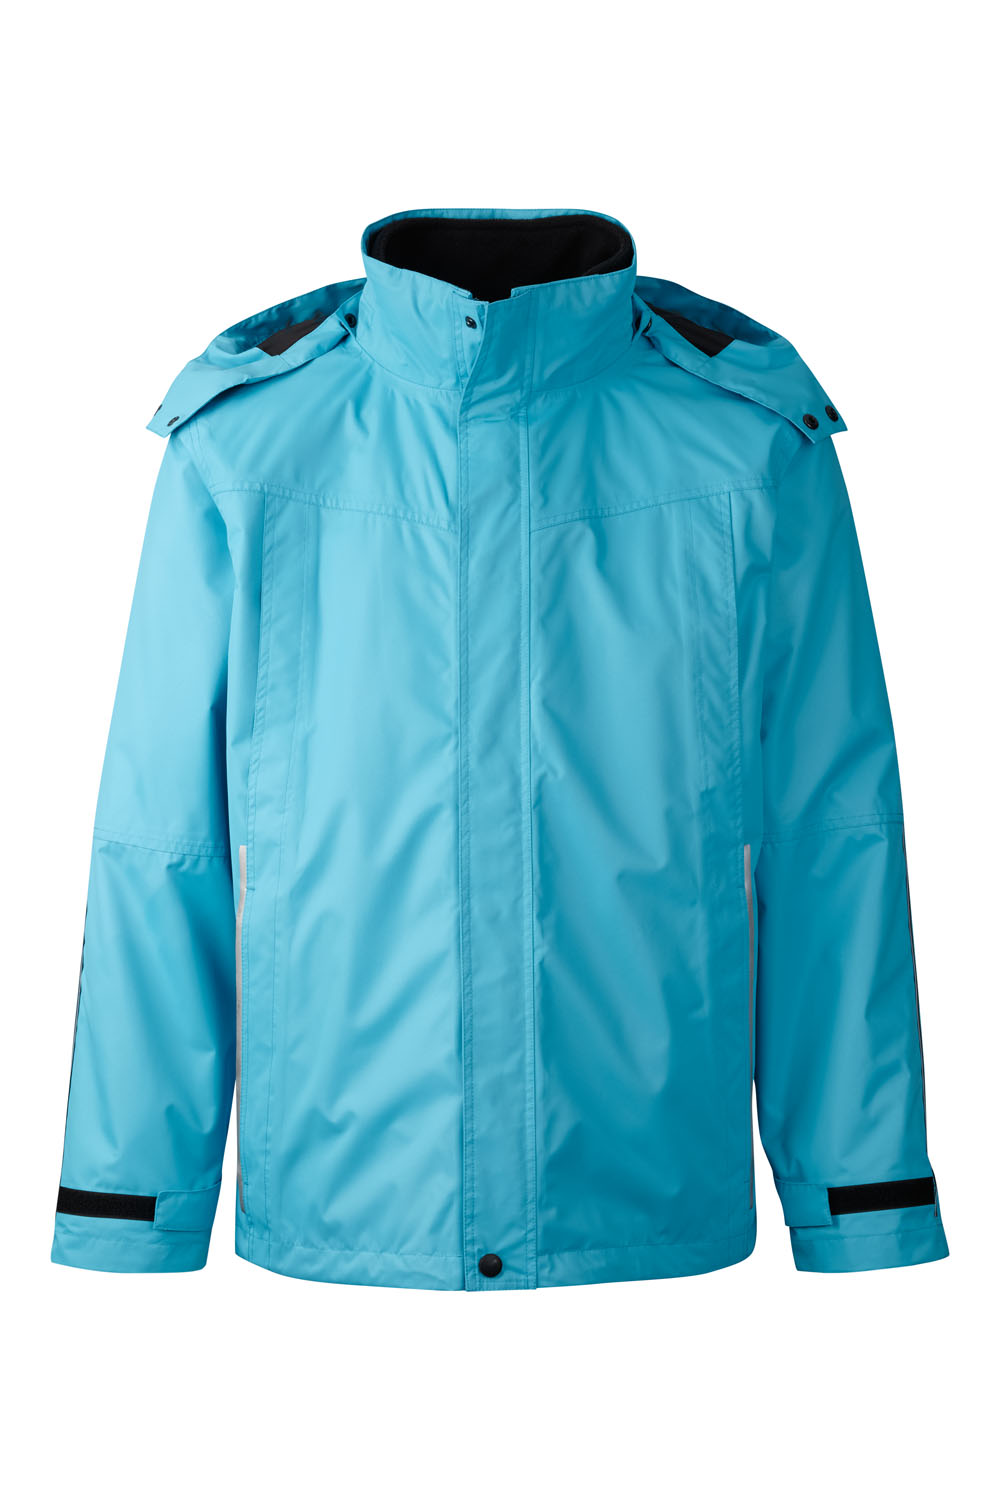 99045-4 xplor care shell jacket unisex aqua front